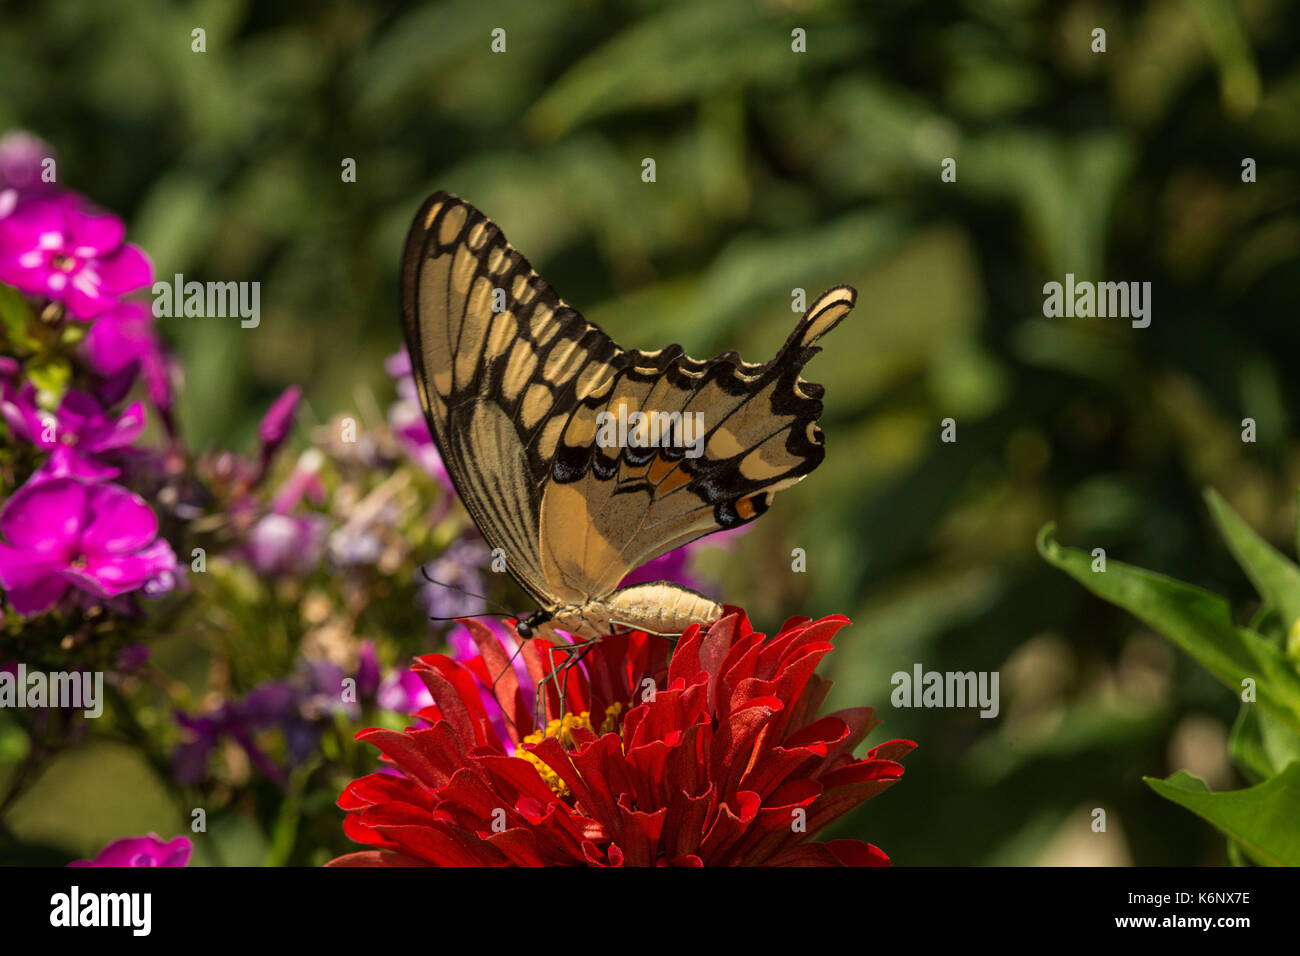 Giant Swallowtail butterfly on Zinnia flower. Stock Photo